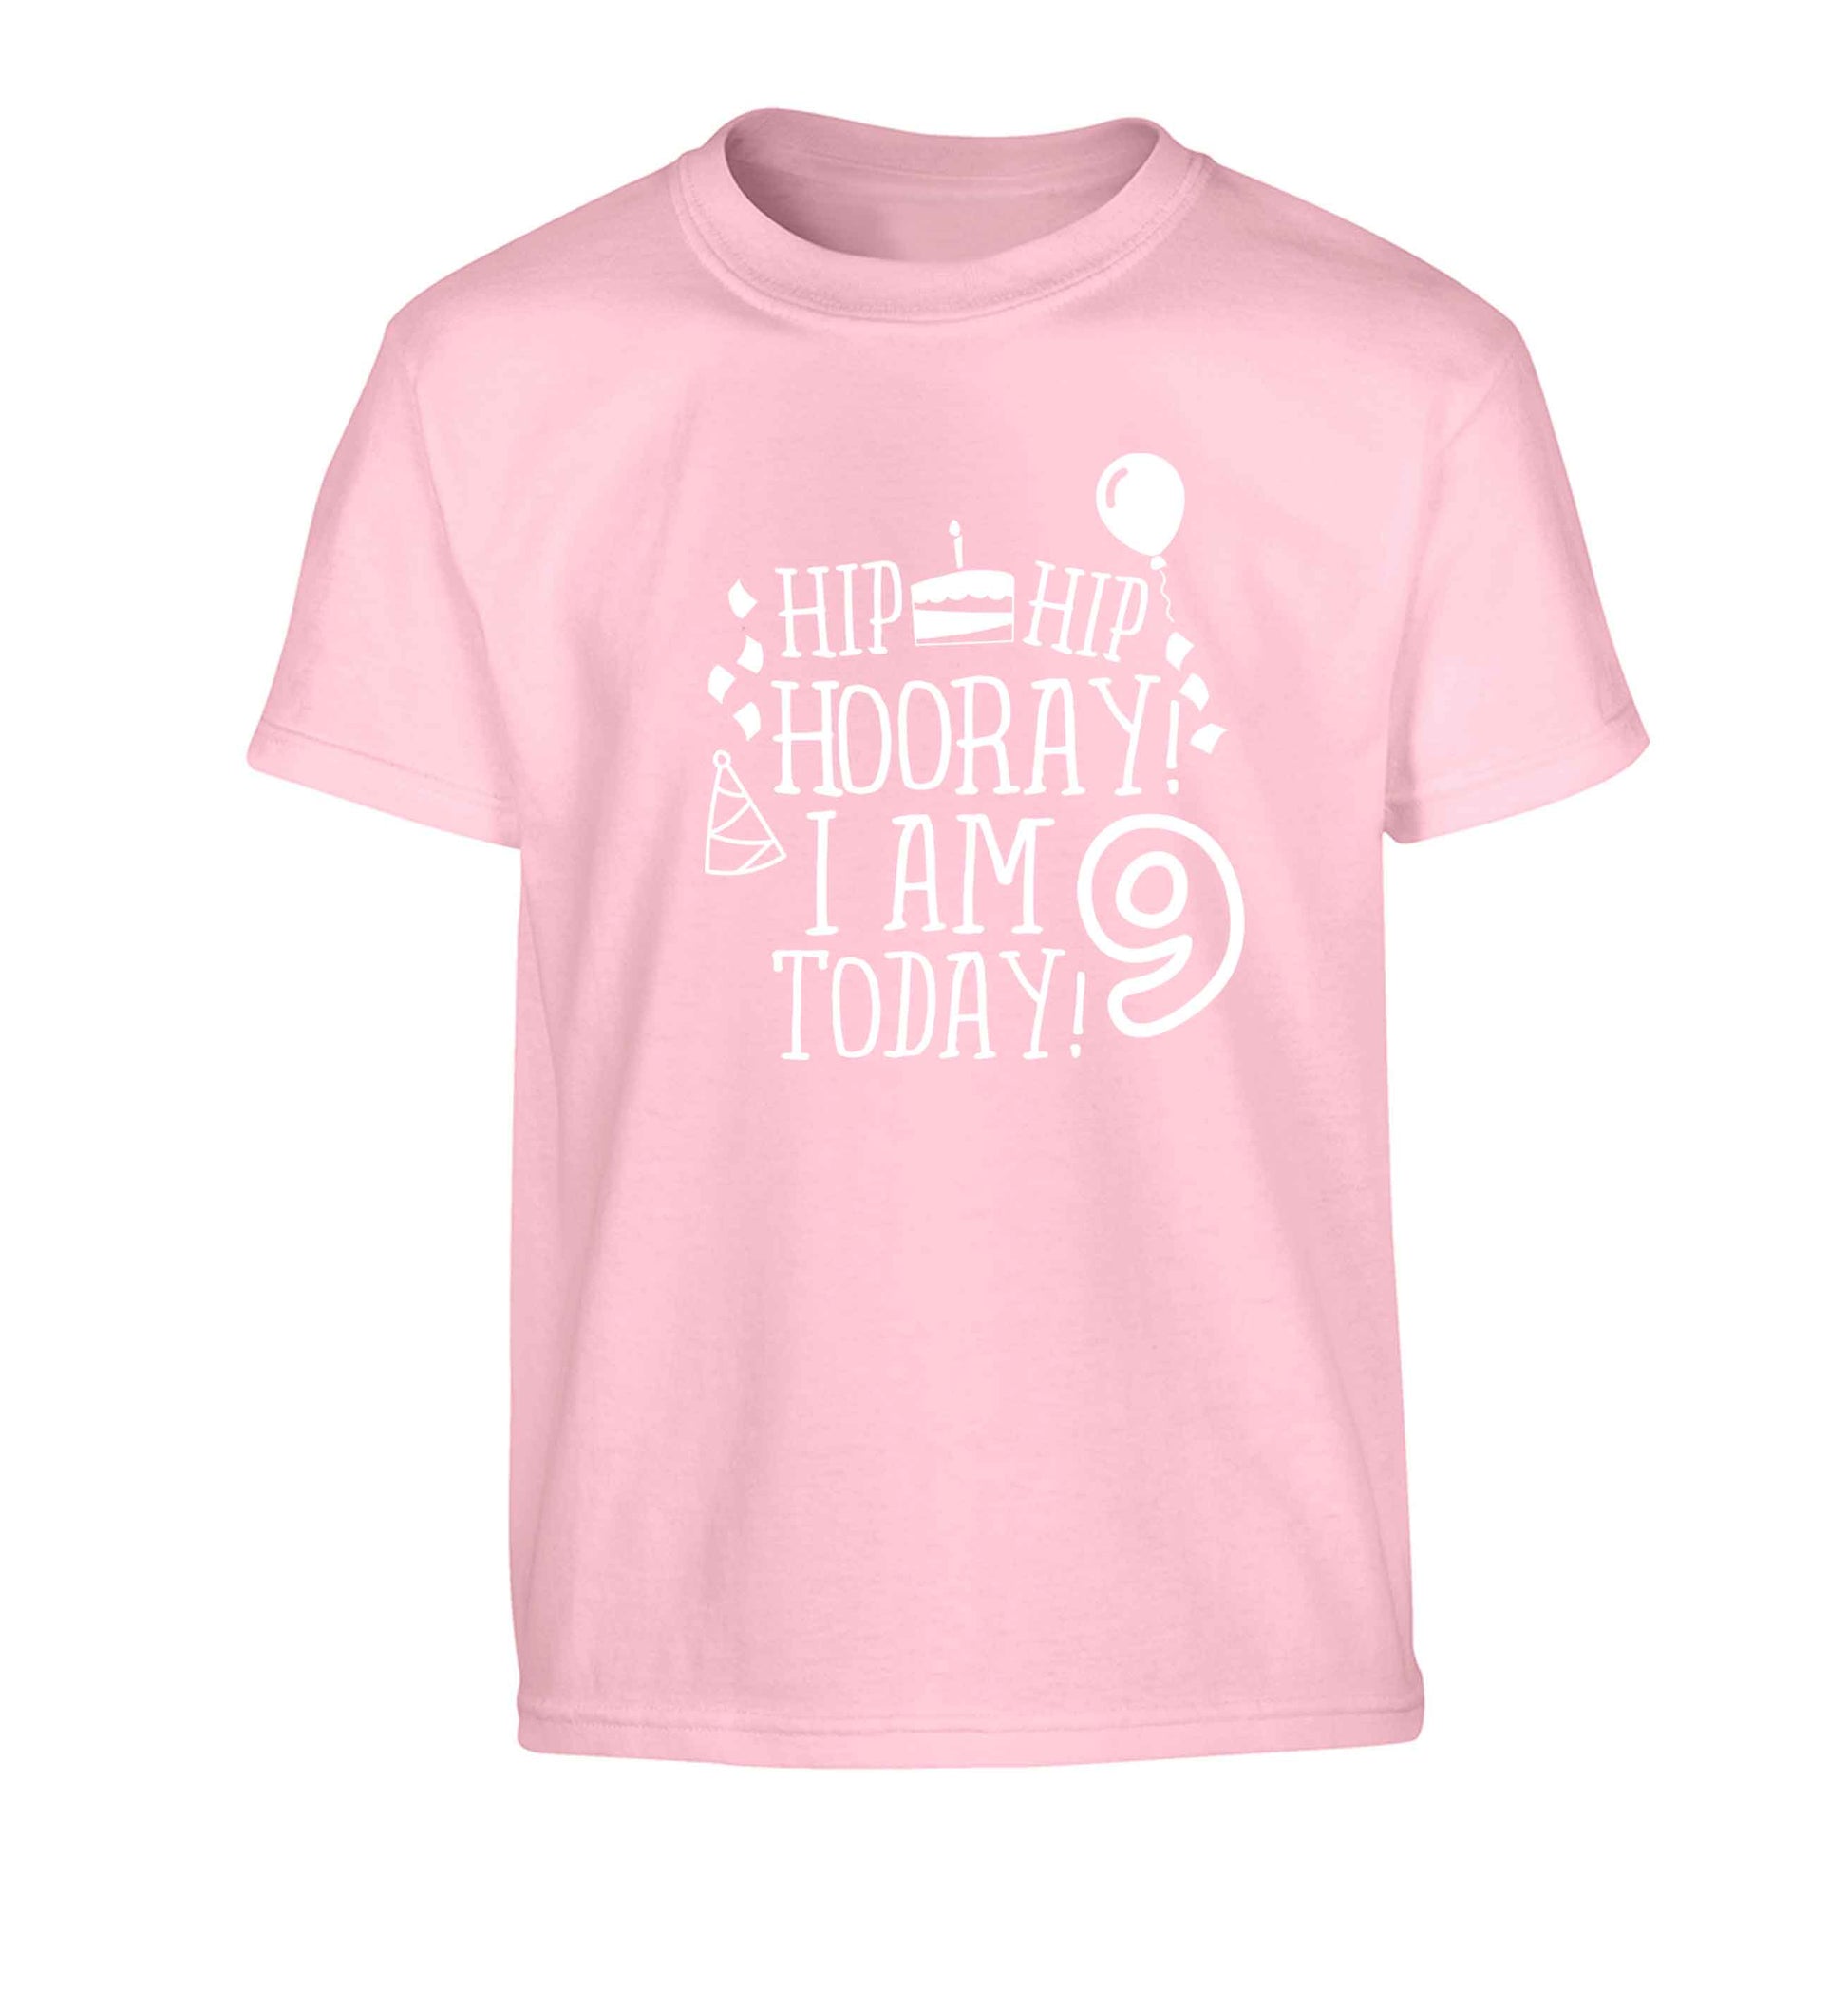 Hip hip hooray I am 9 today! Children's light pink Tshirt 12-13 Years